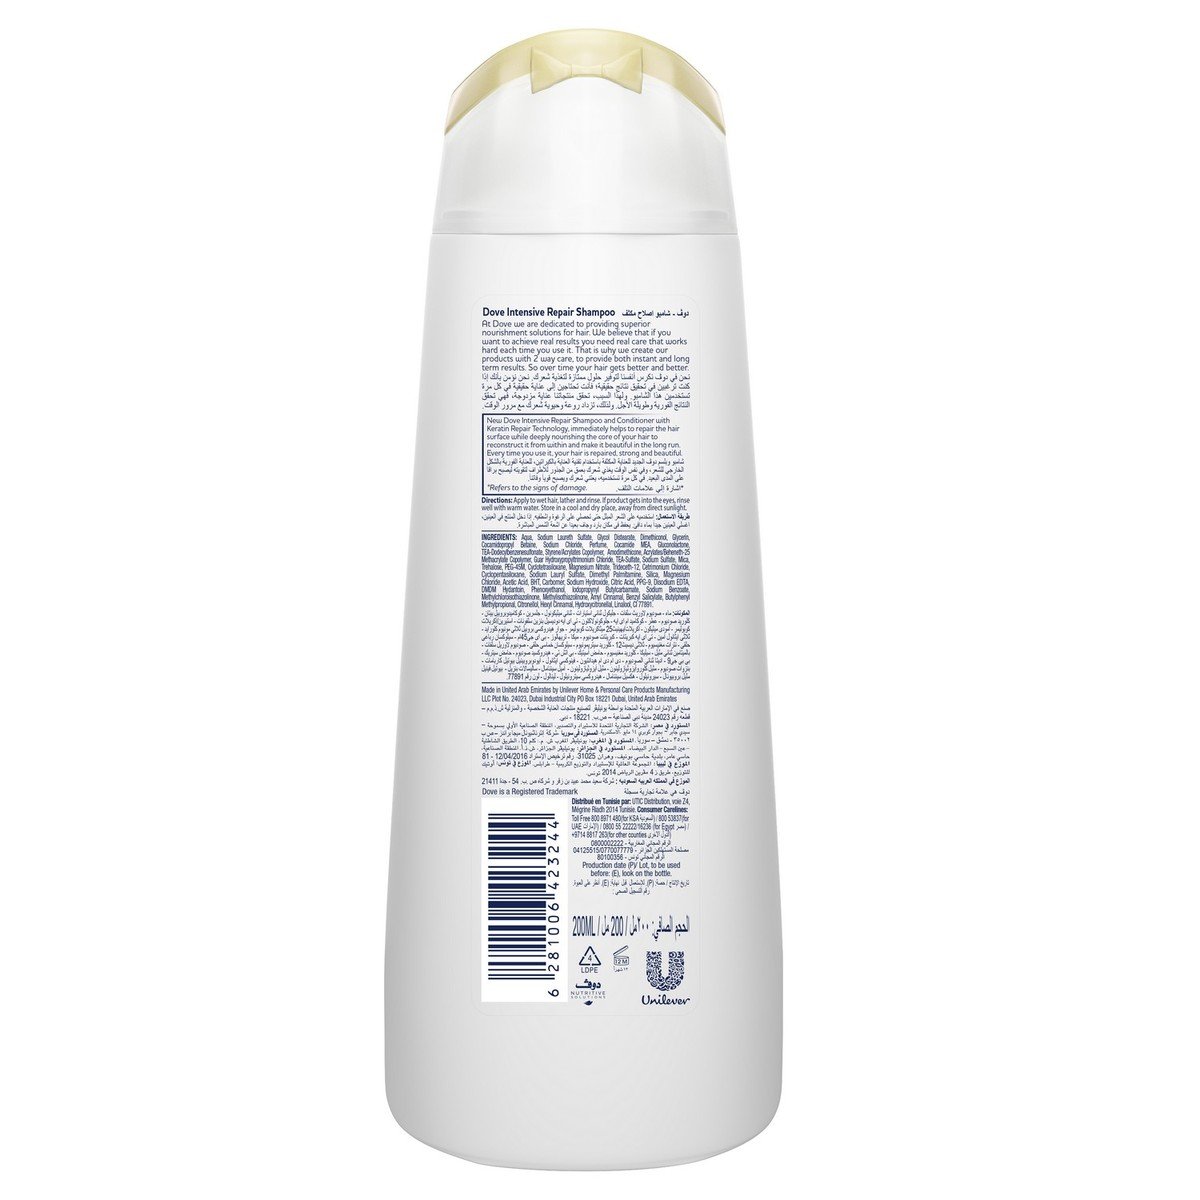 Dove Nutritive Solutions Intense Repair Shampoo, 200 ml